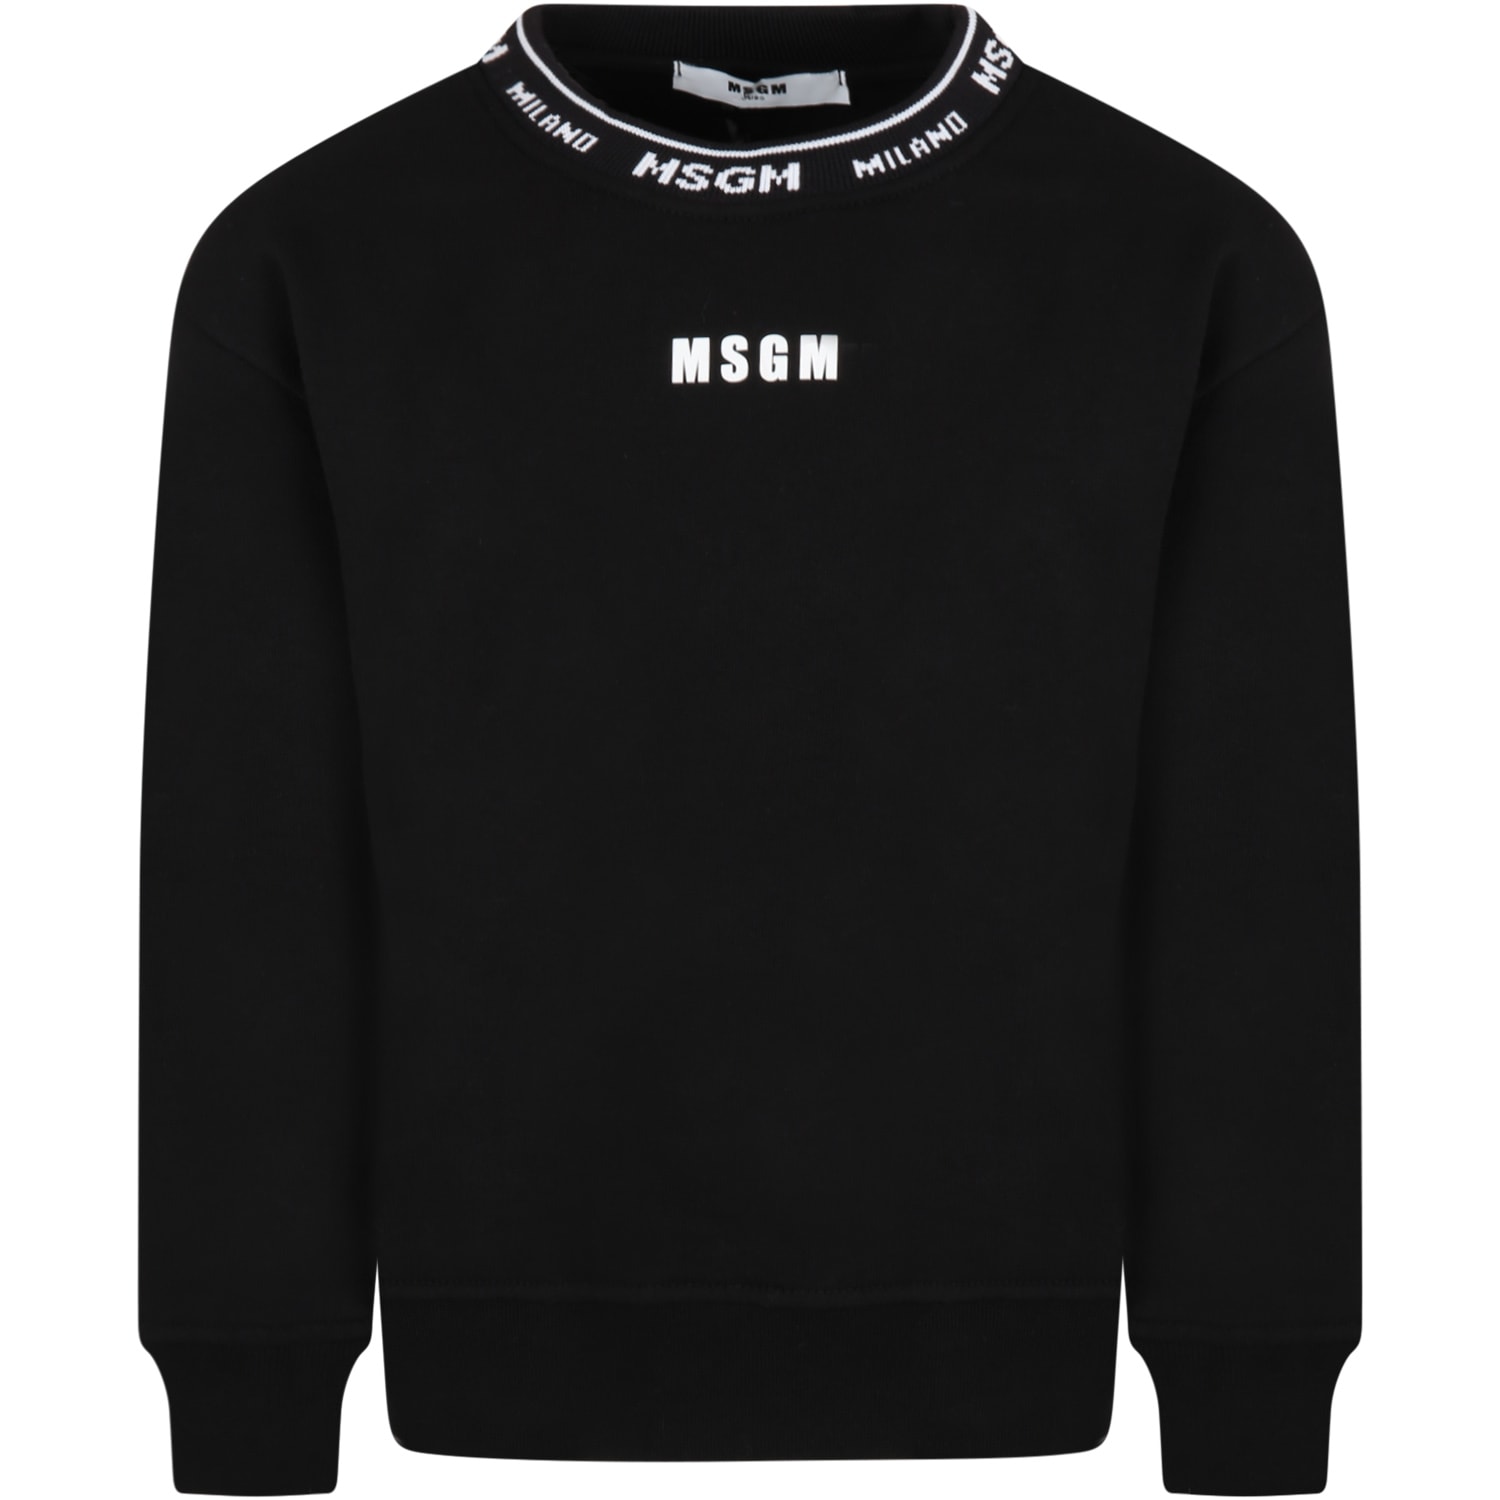 MSGM Black Sweatshirt For Kid With Logos